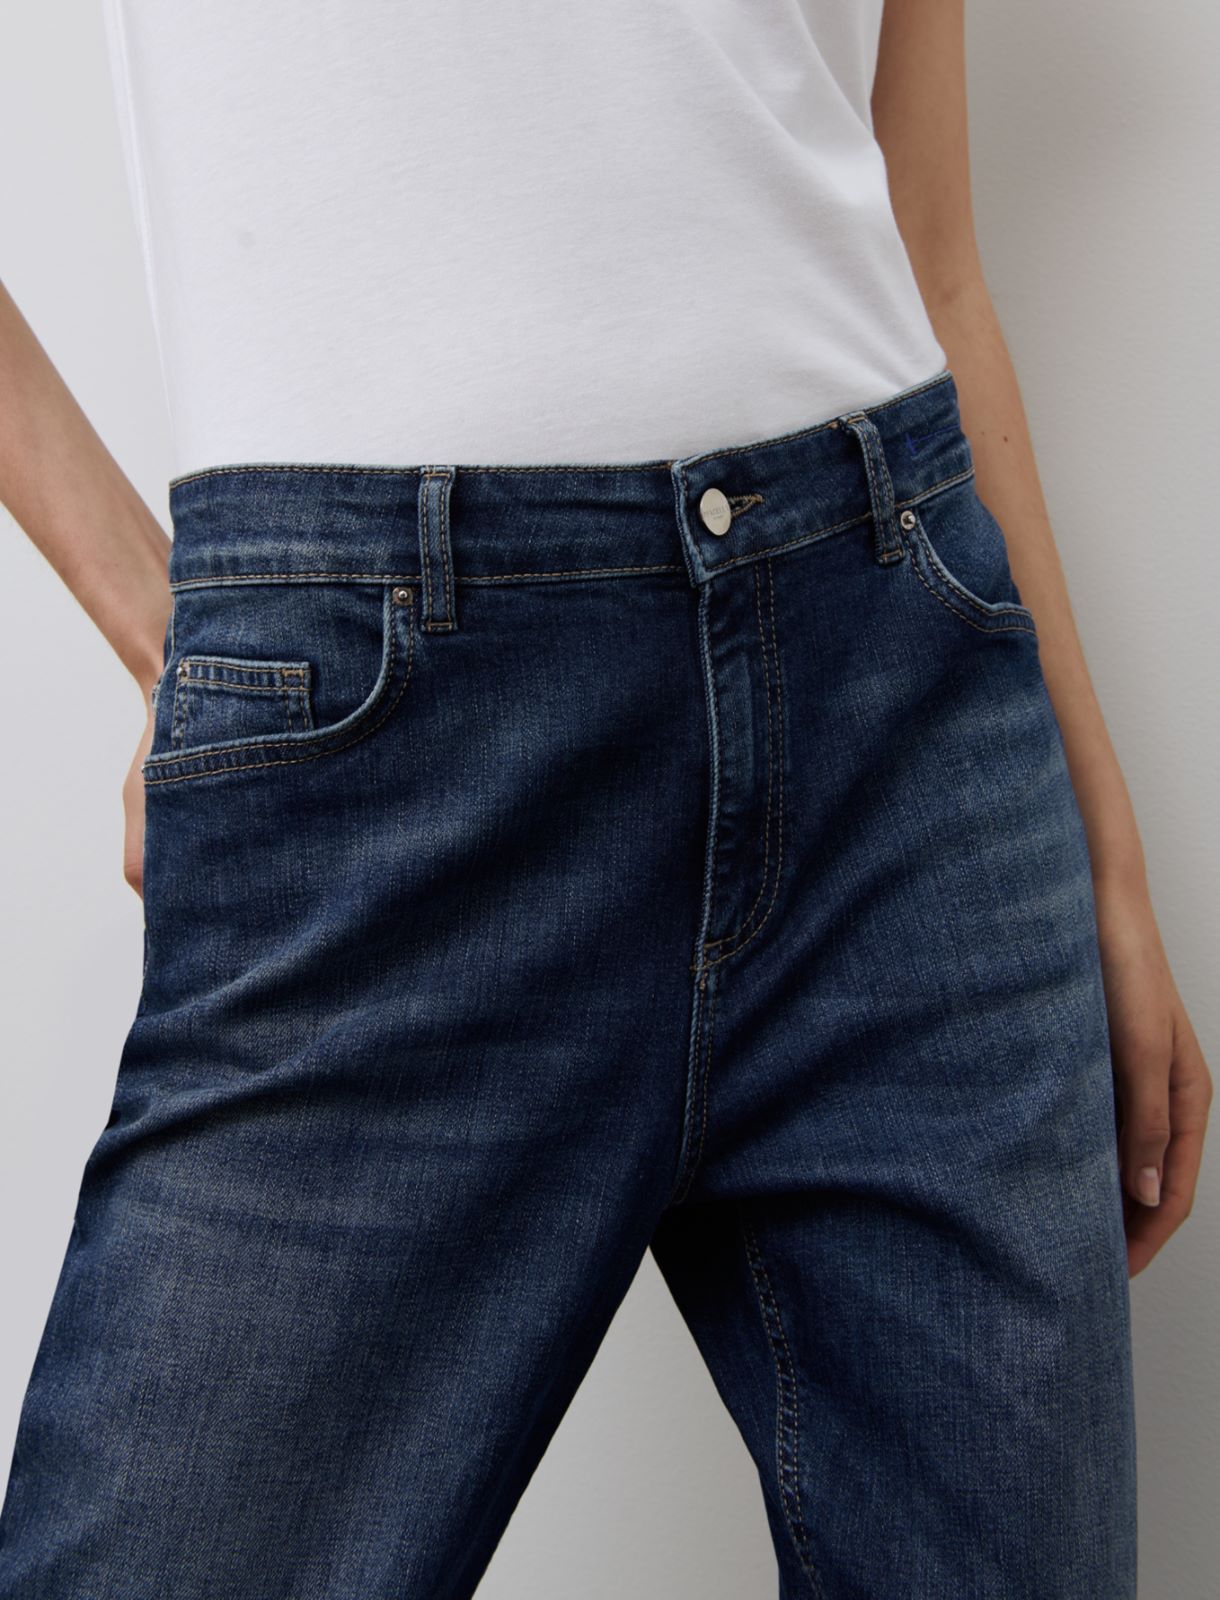 Tomboy-fit jeans Marella